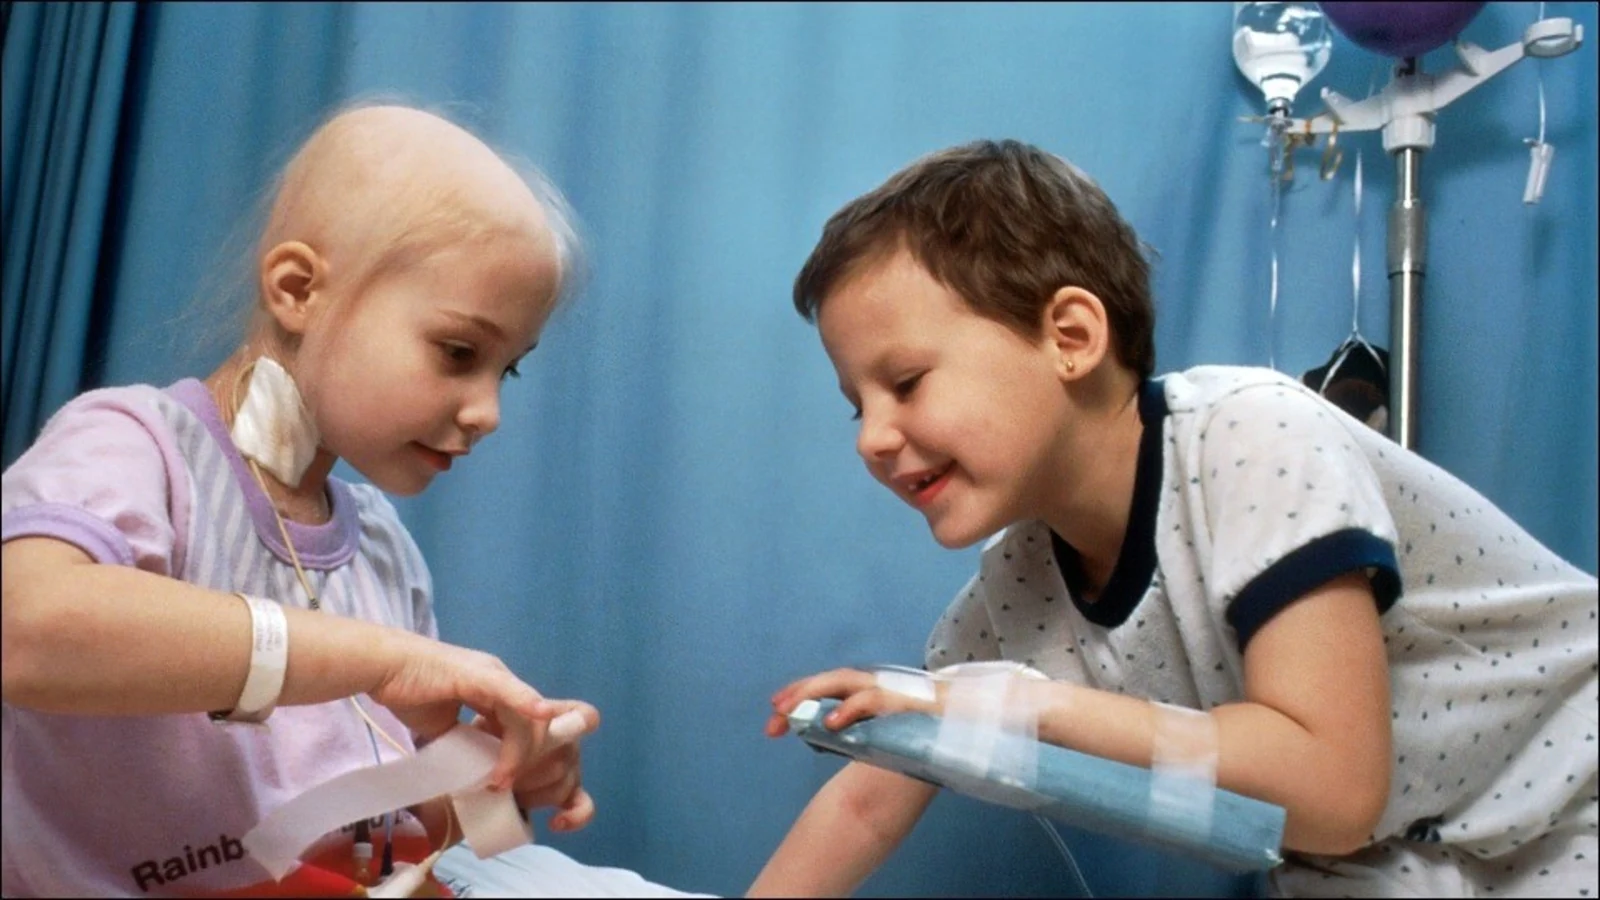 Combatting common cancers in children